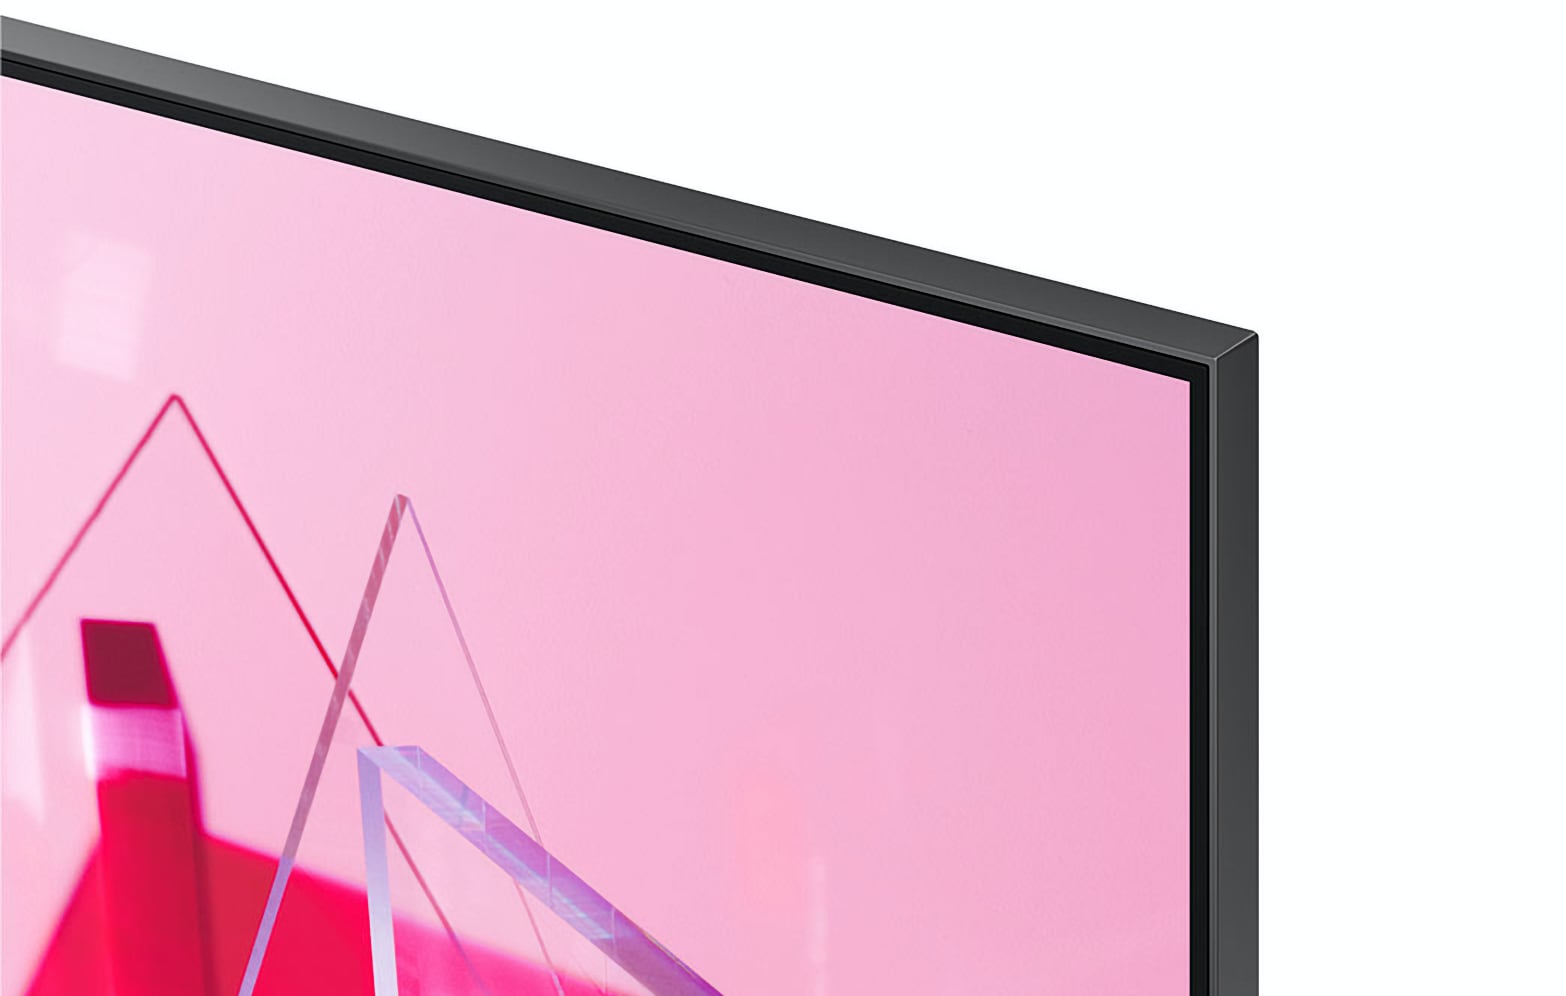 Samsung Q60T 2020 QLED LCD TV